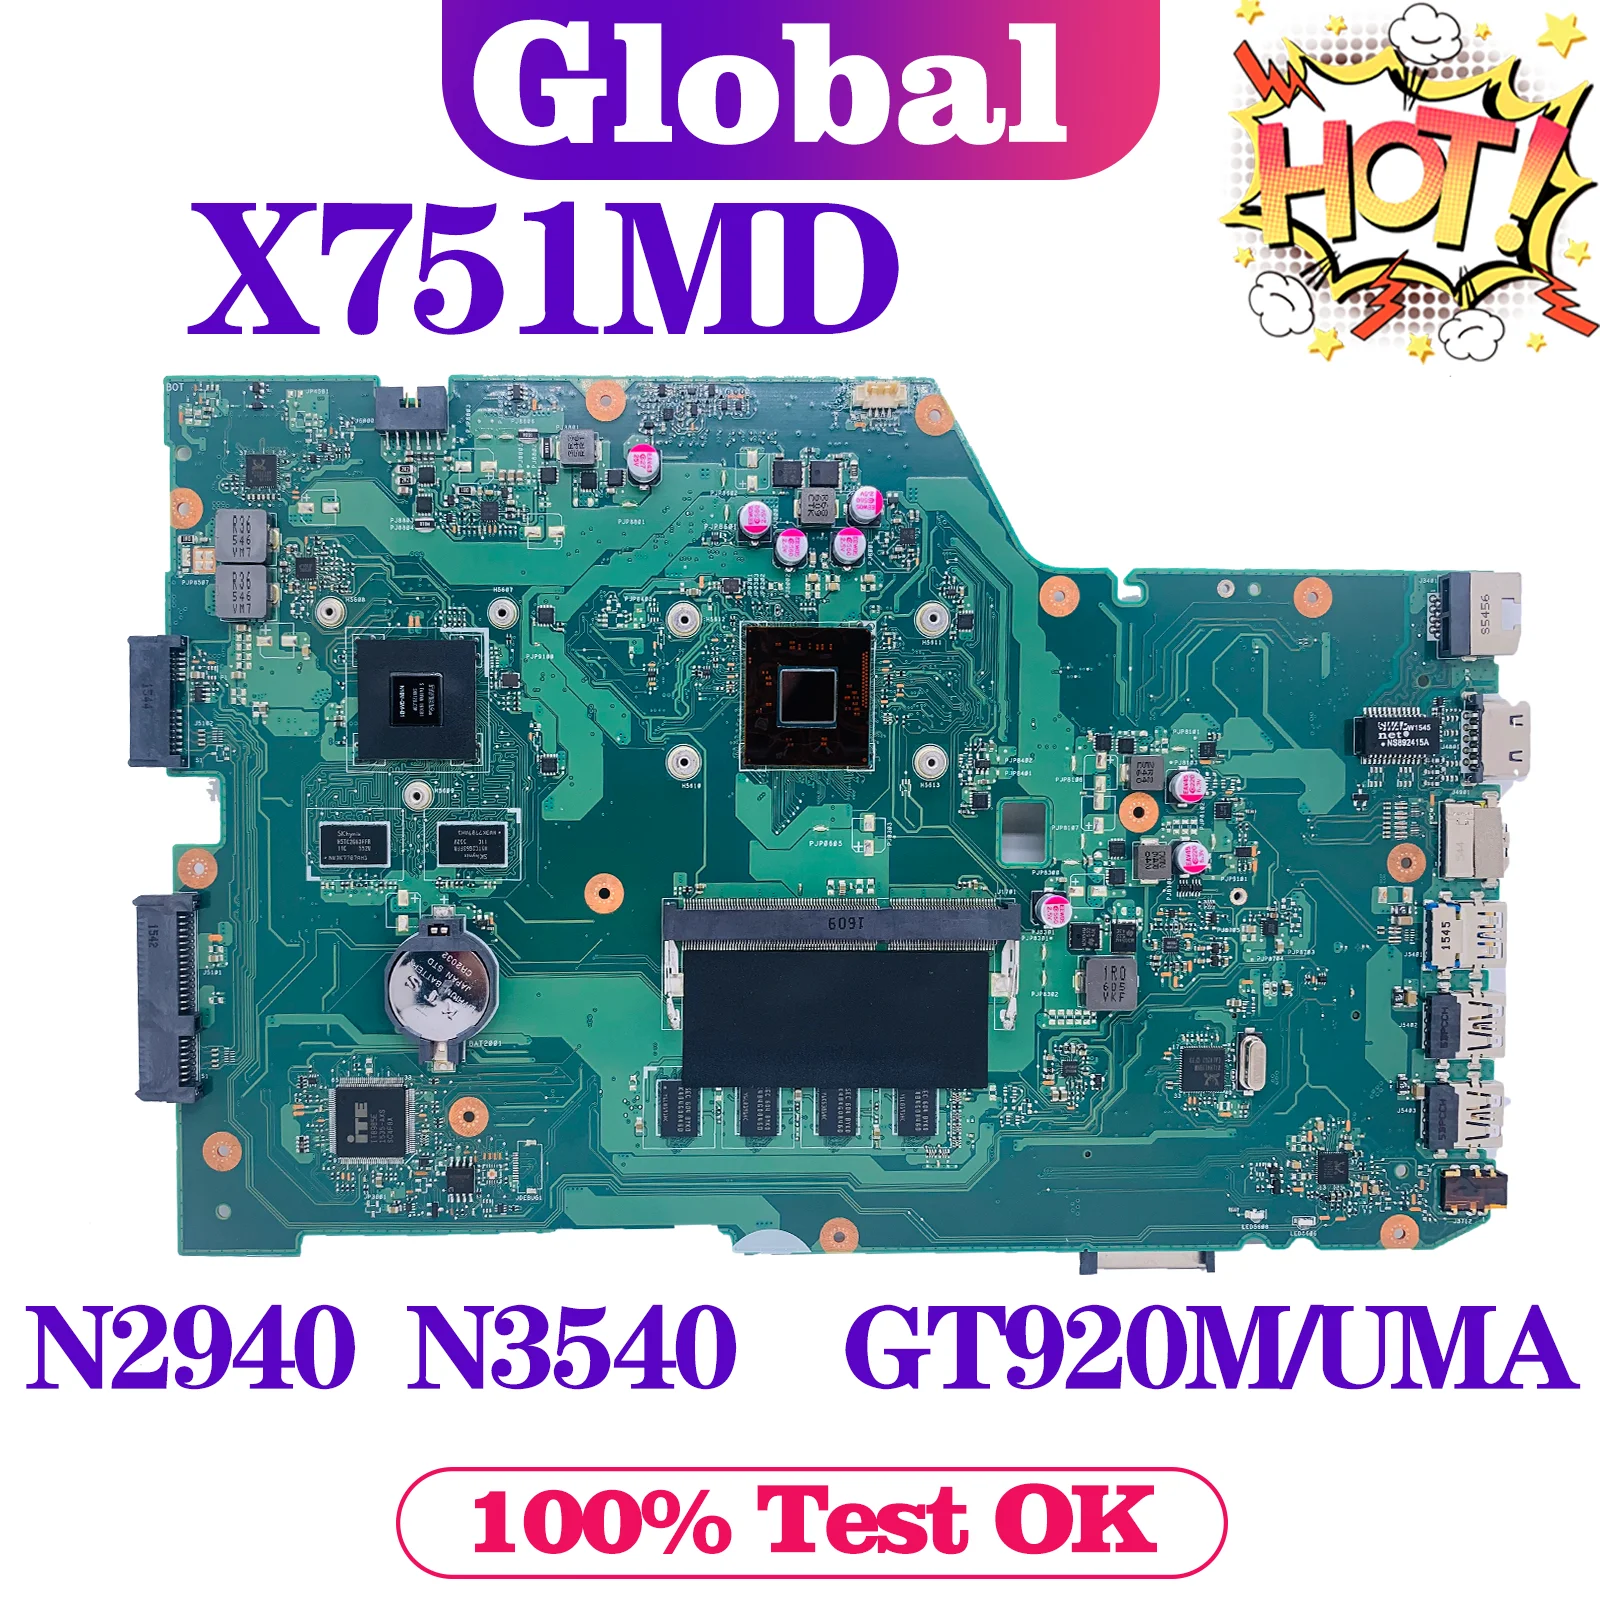 

KEFU X751MD Laptop Motherboard For ASUS K751M K751MA X751MJ R752MA X751MA Mainboard With N2840 N2930/N3540 4G-RAM GT920M/UMA